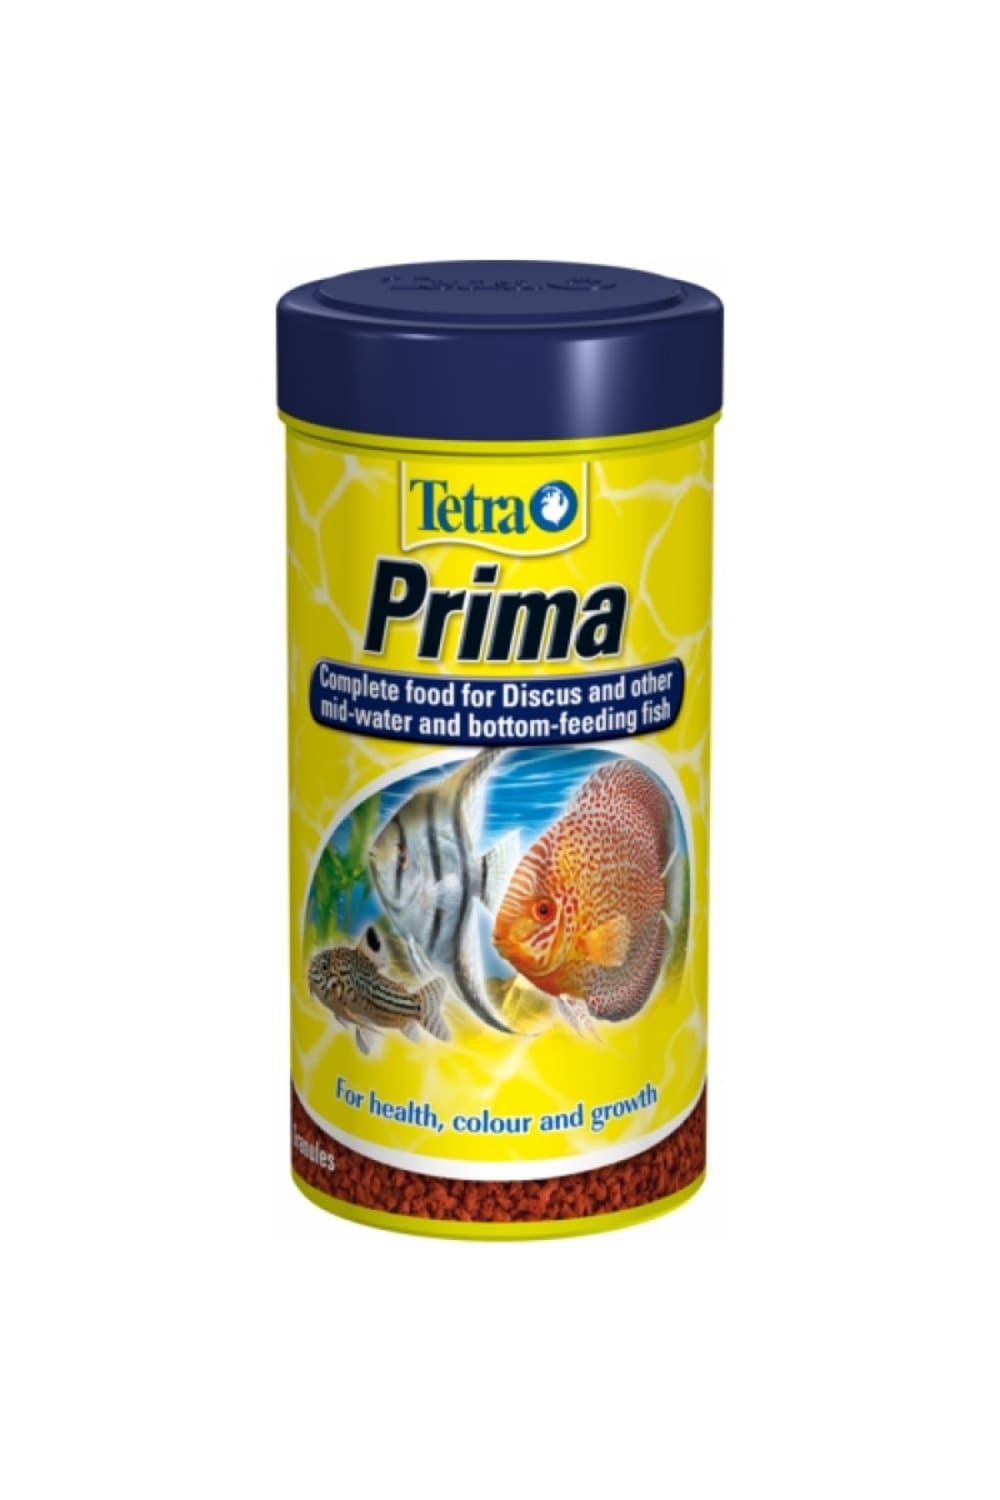 Tetra Prima Fish Food (May Vary) (2.6oz)